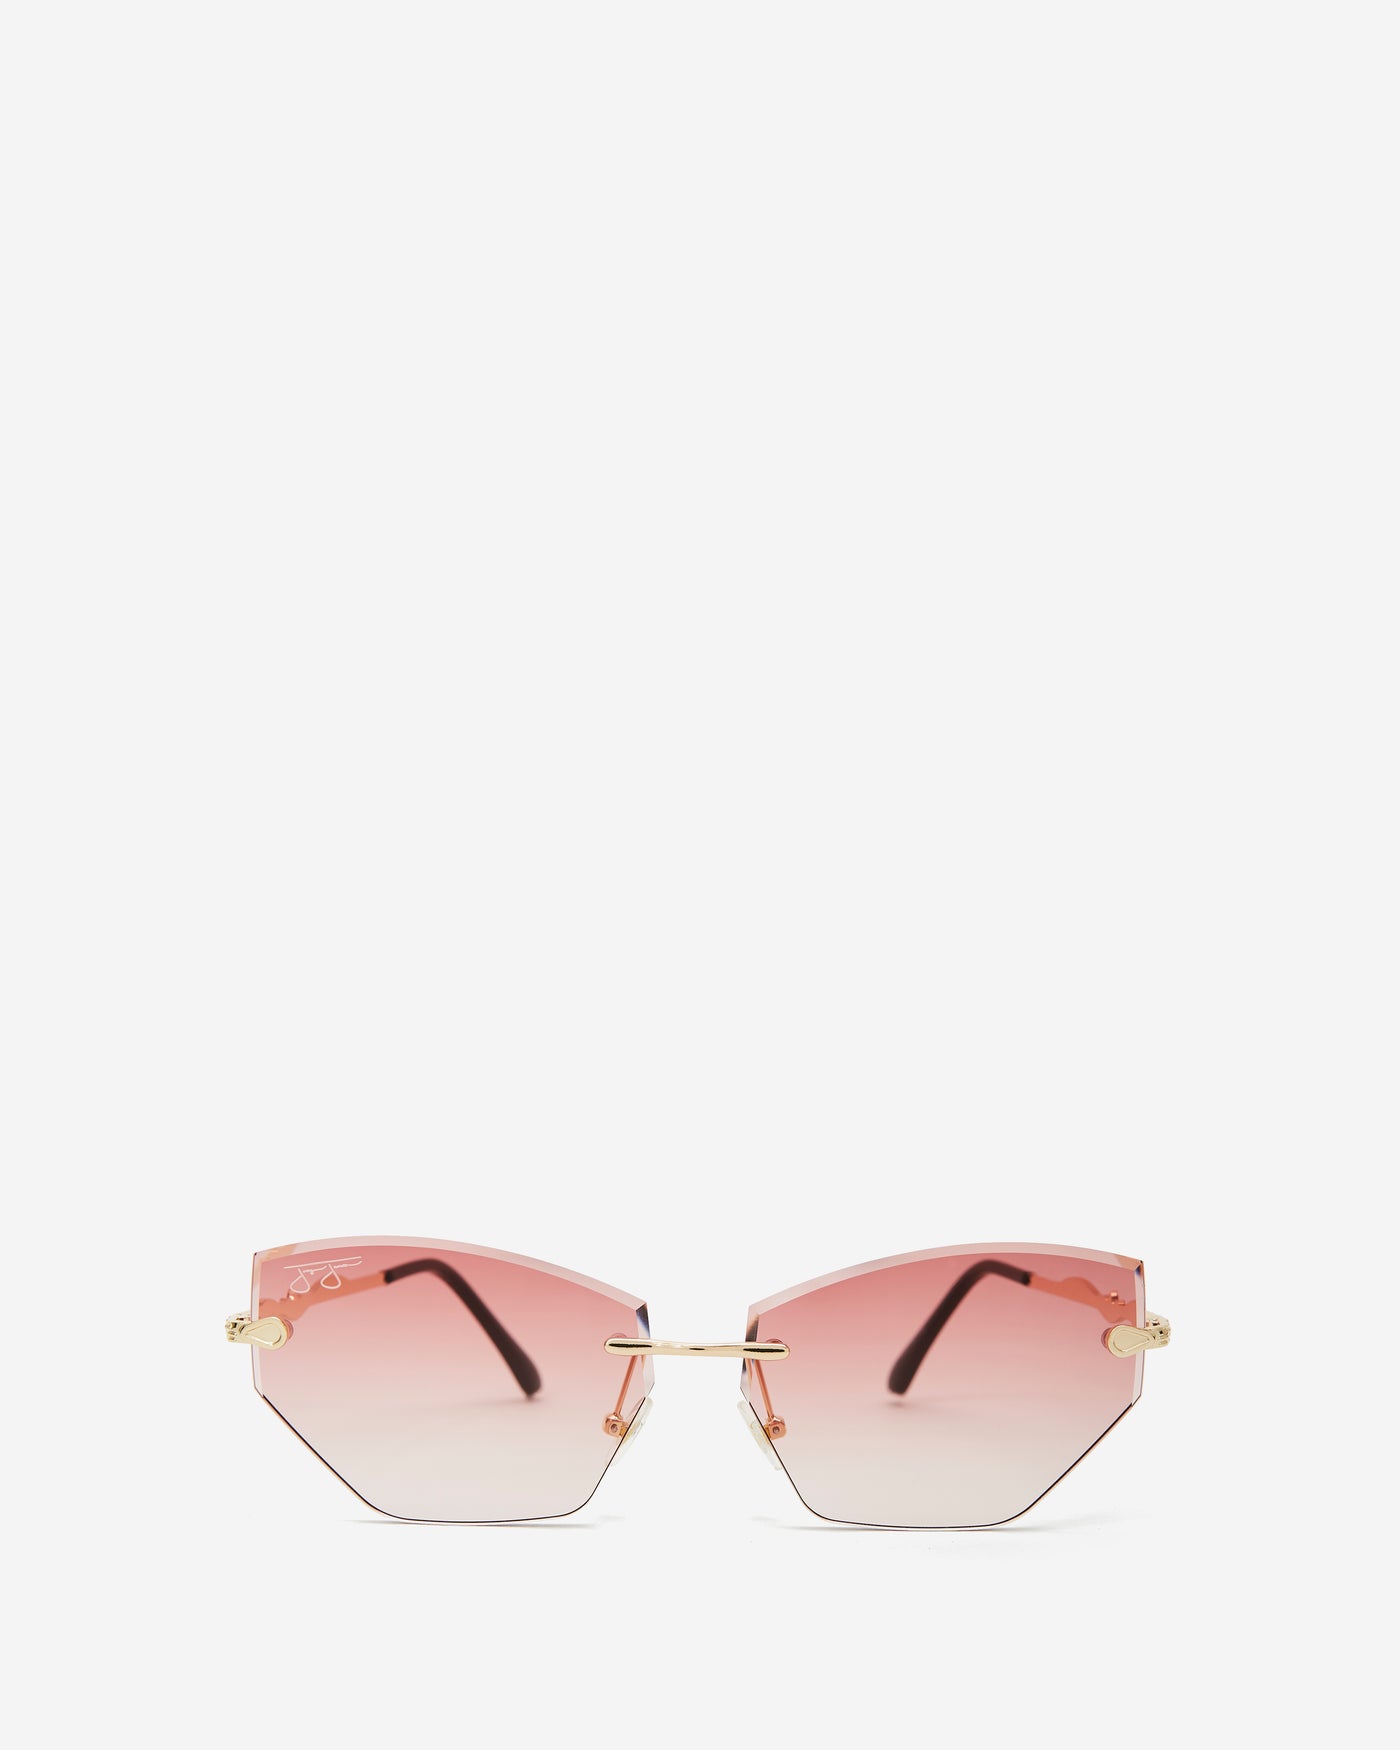 Geometric Metal Frameless Sunglasses - Rose Colored Lens Sunglasses Joey James, The Label   